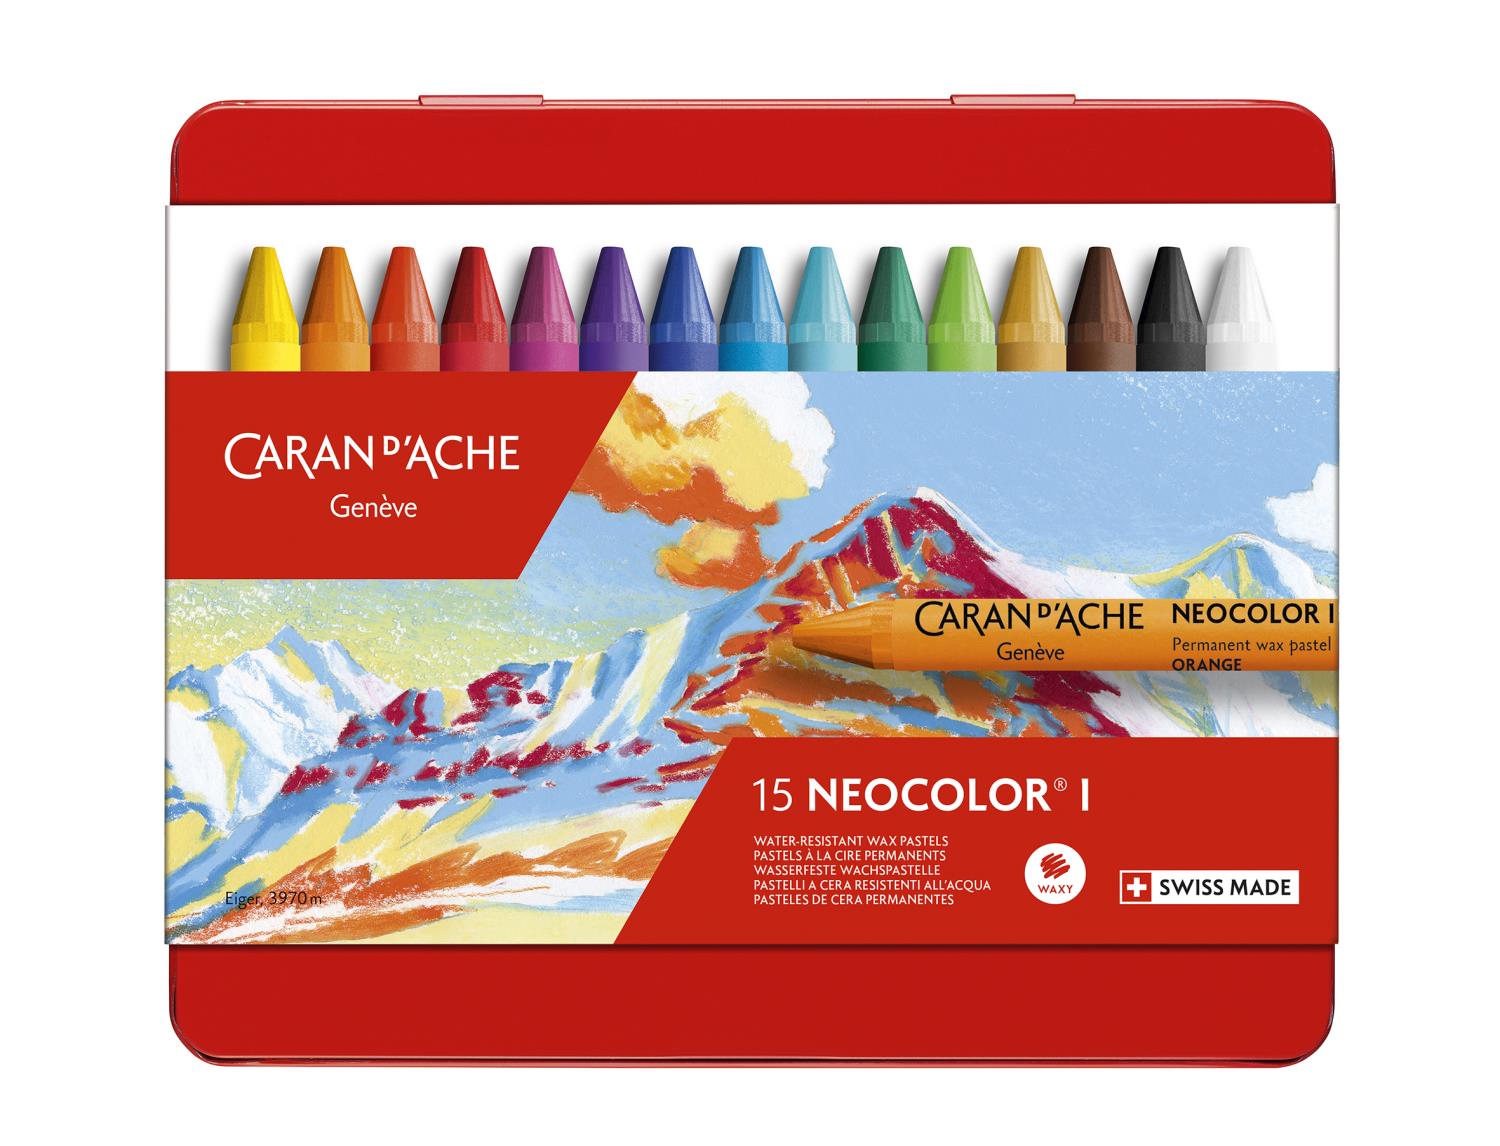 Caran `d ache Neocolor I Water-resistant Wax pastel 15